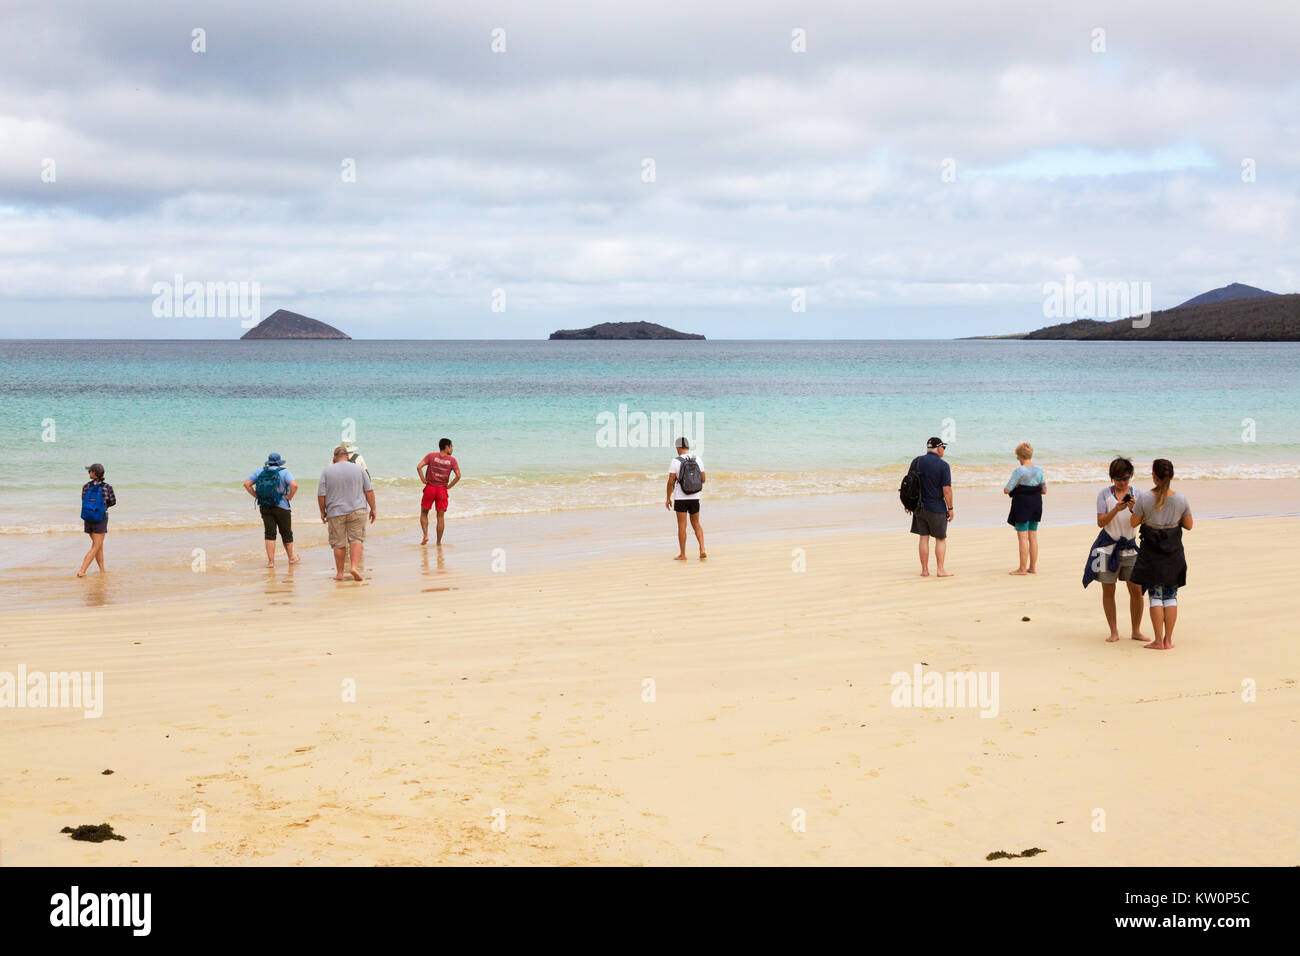 Galapagos beach - tourists on the beach, Floreana Island, Galapagos Islands, Ecuador South America Stock Photo